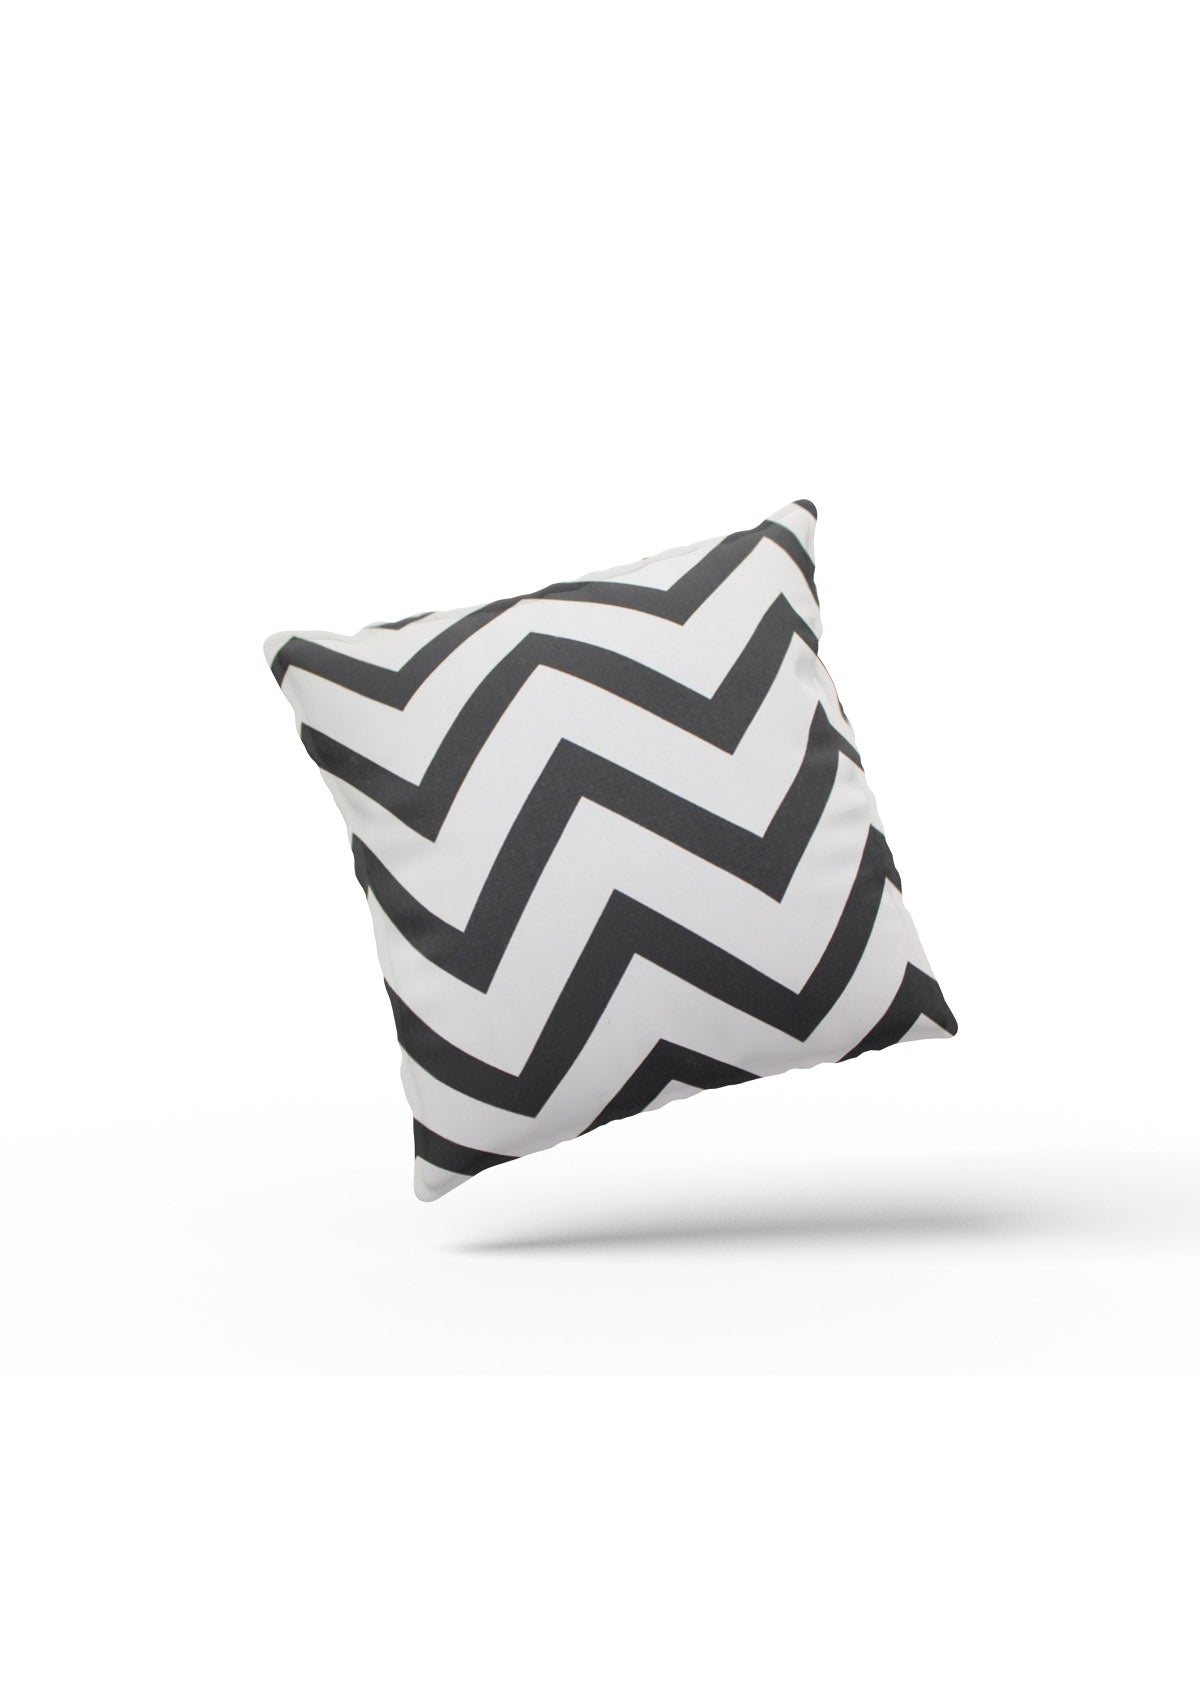 Classic monochrome stripe cushion cover for elegant decor